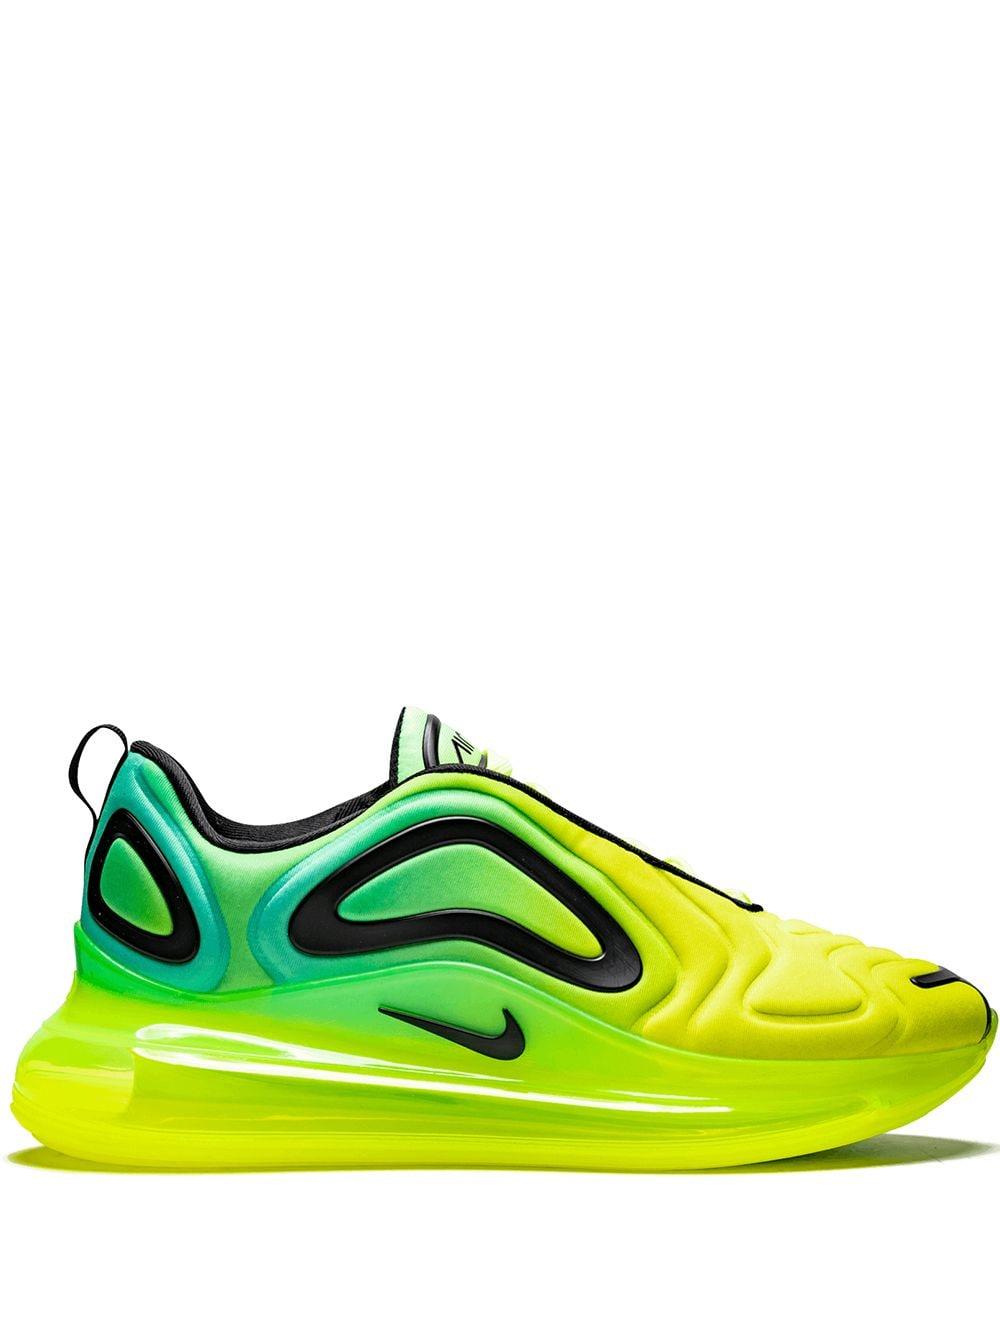 Nike Air Max 720 Sneakers in Yellow - Lyst